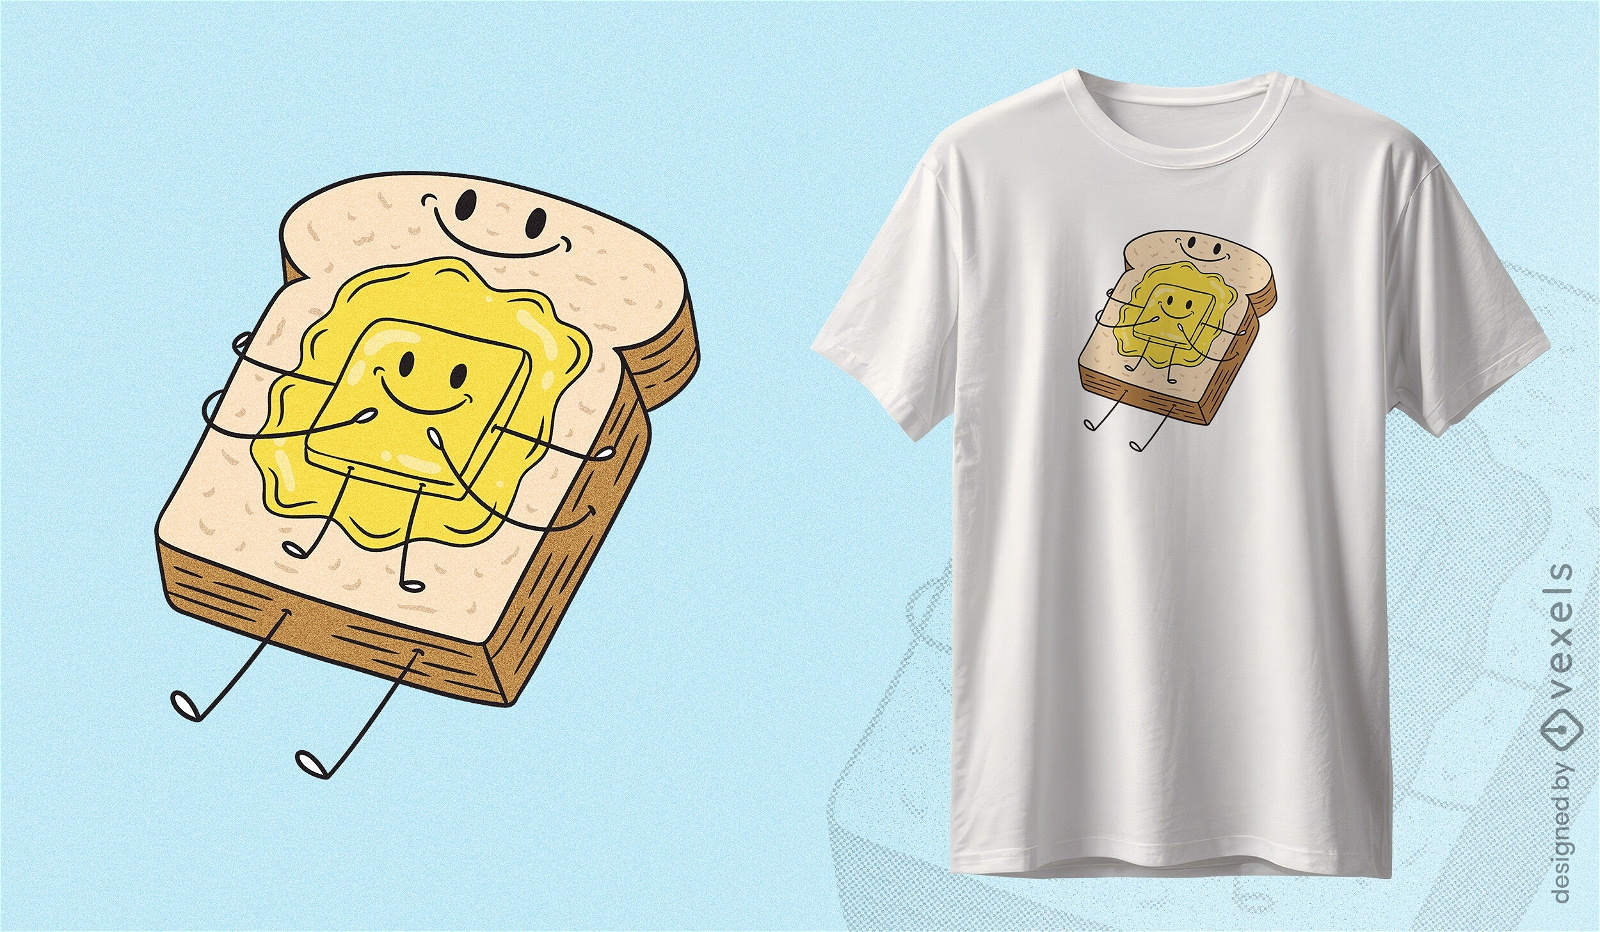 Toast and butter cute t-shirt design